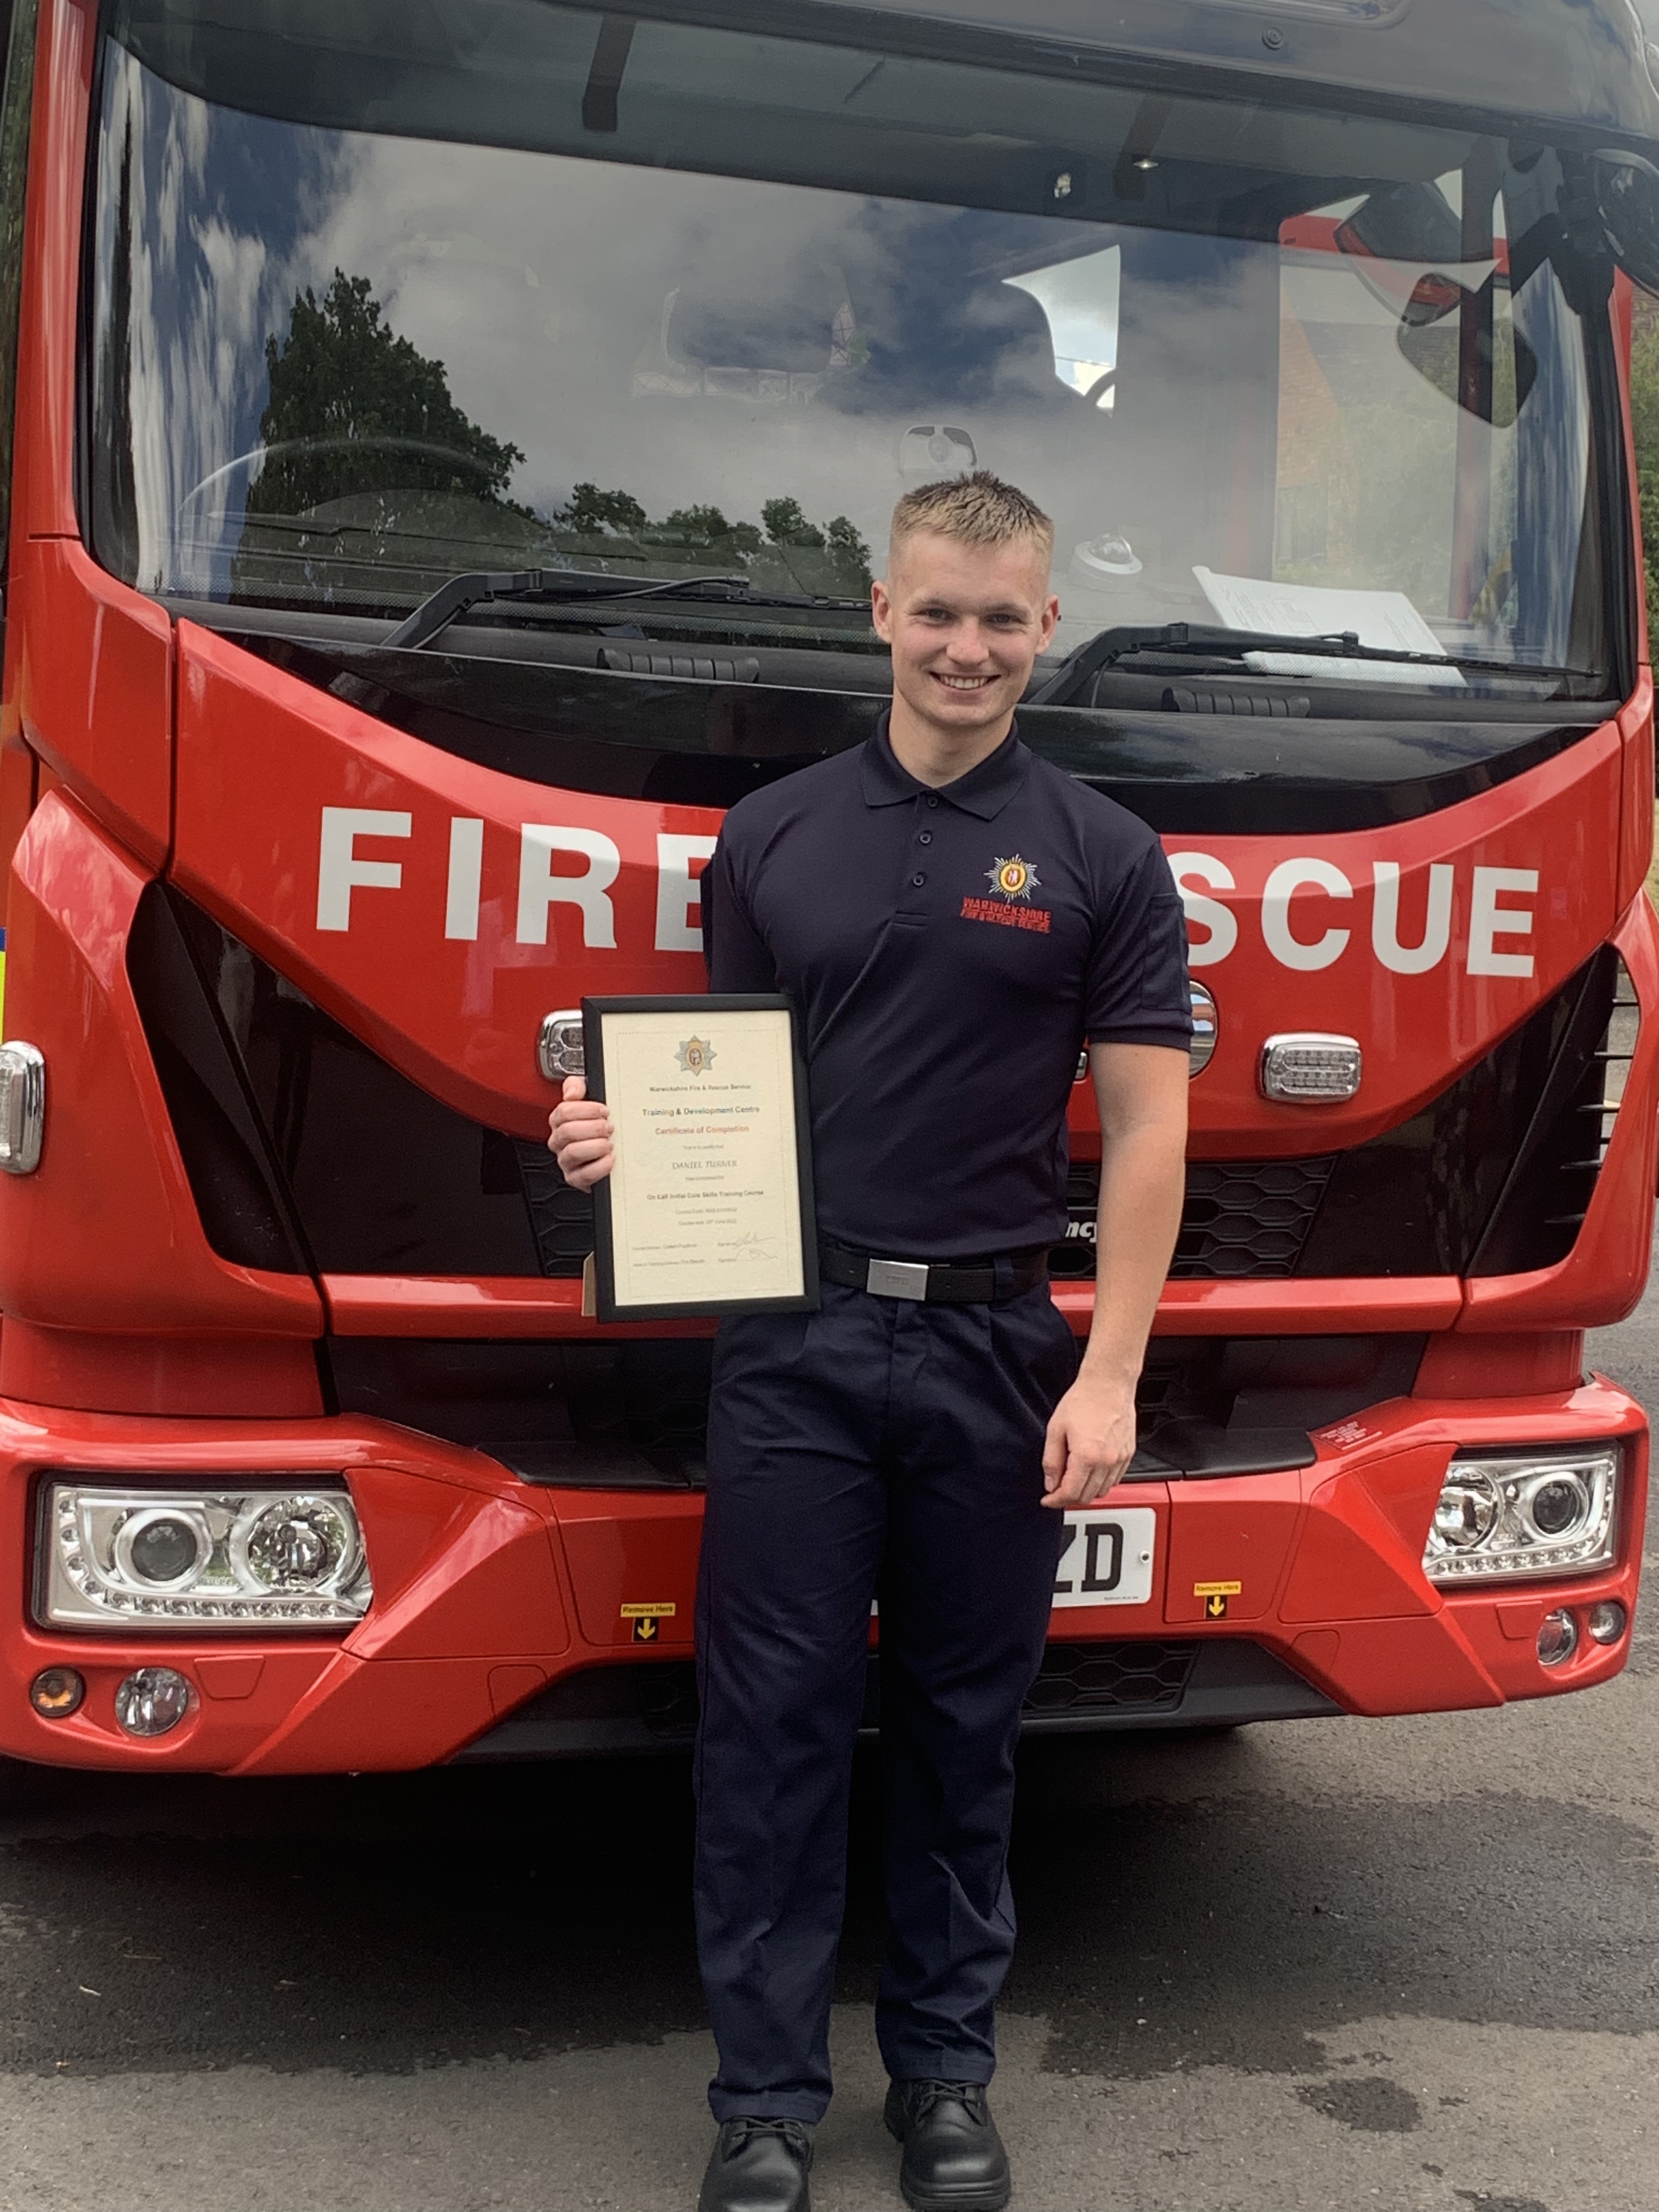 Firefighter Daniel holding certificate